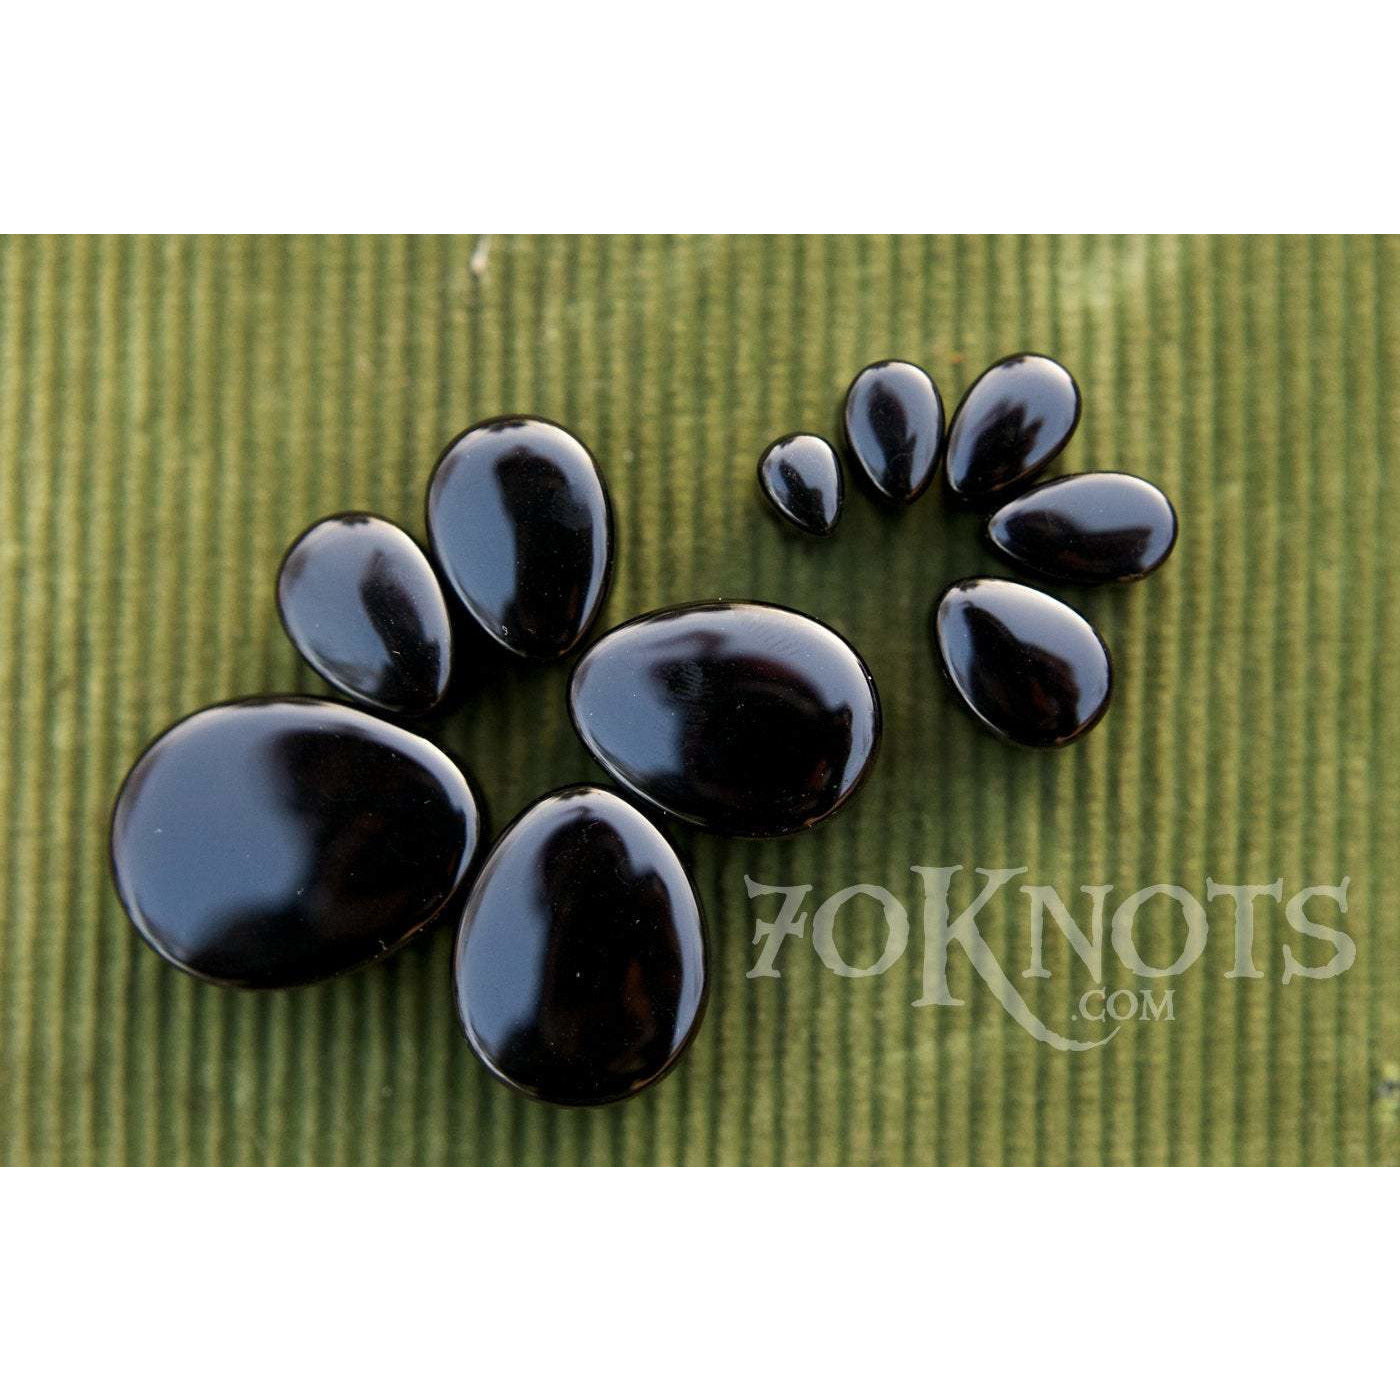 Teardrop Black Obsidian Double Flared Plugs, Pair - 70 Knots